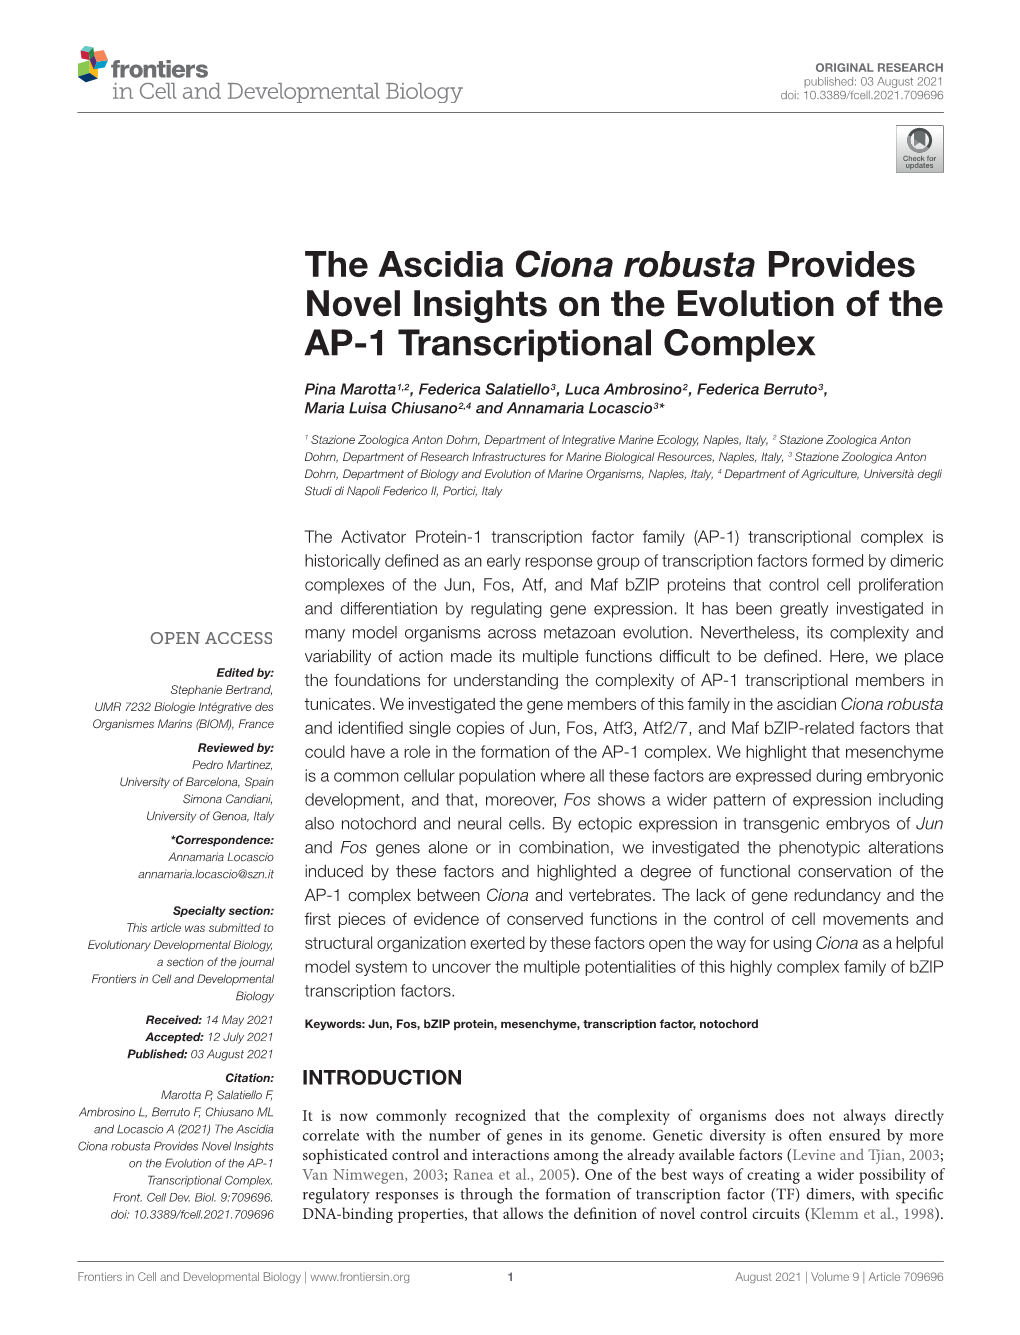 The Ascidia Ciona Robusta Provides Novel Insights on the Evolution of the AP-1 Transcriptional Complex